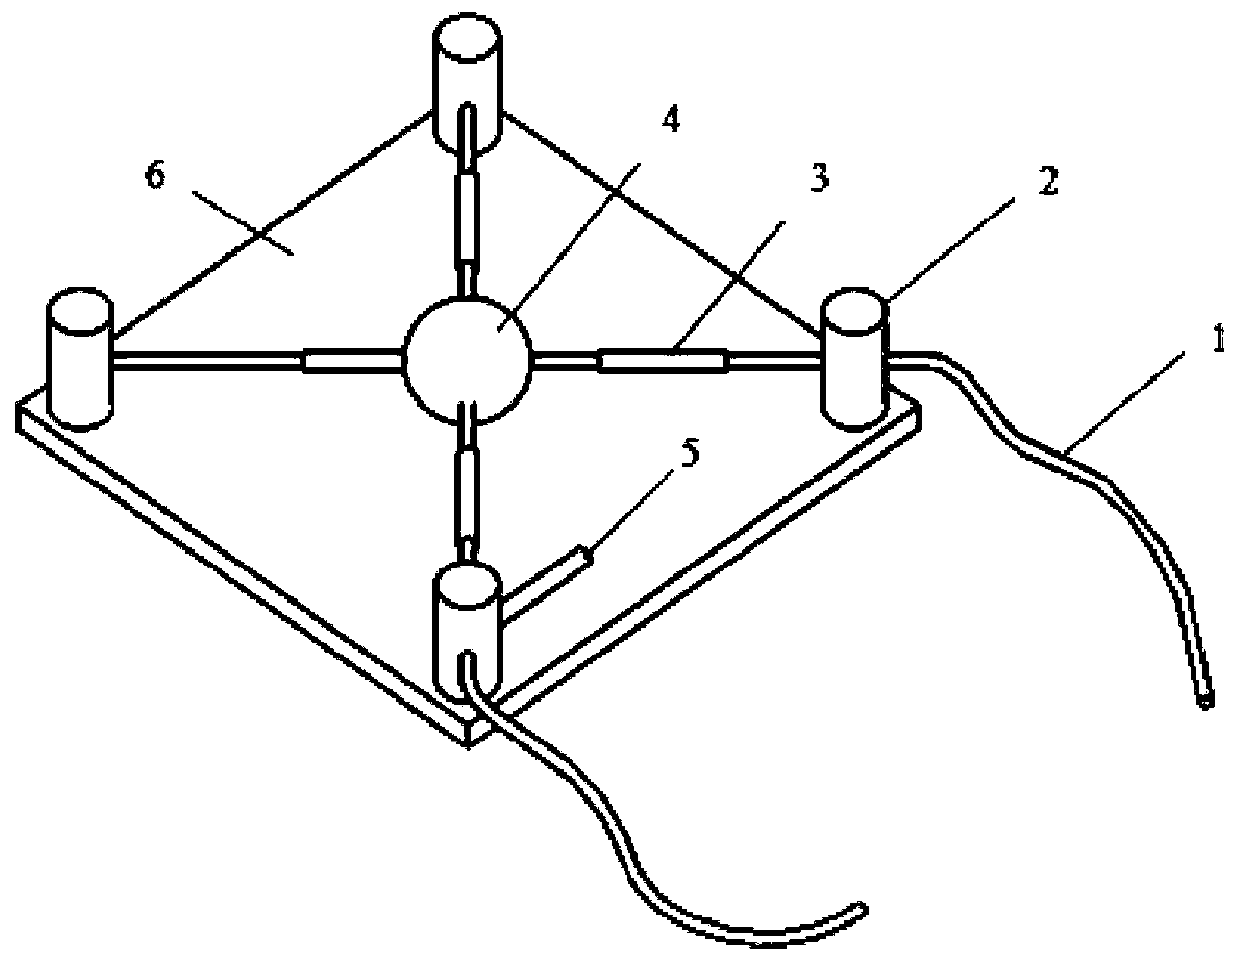 Two-dimensional fiber grating inclination sensor